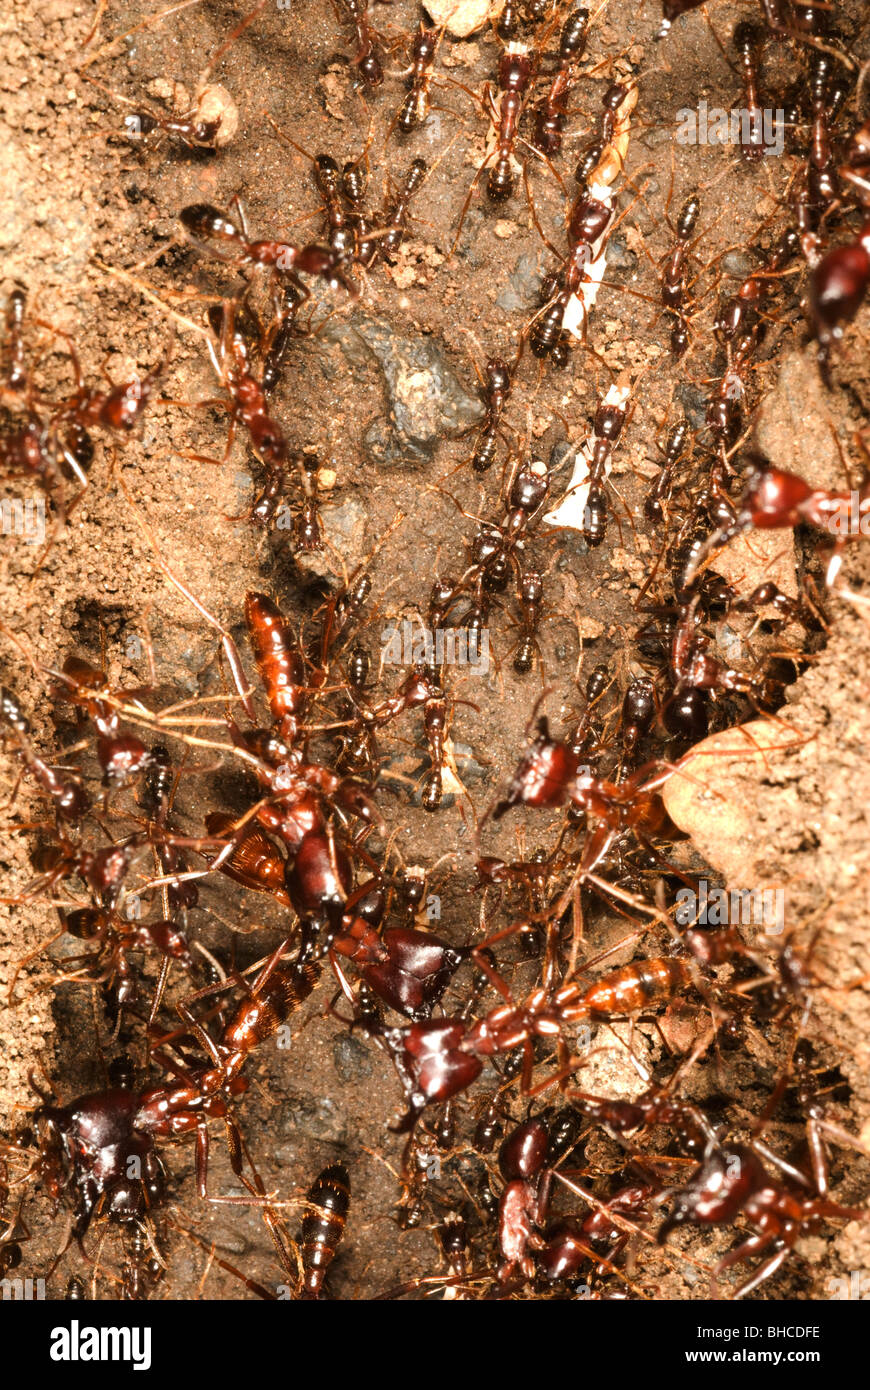 Dung beetle Stock Photo